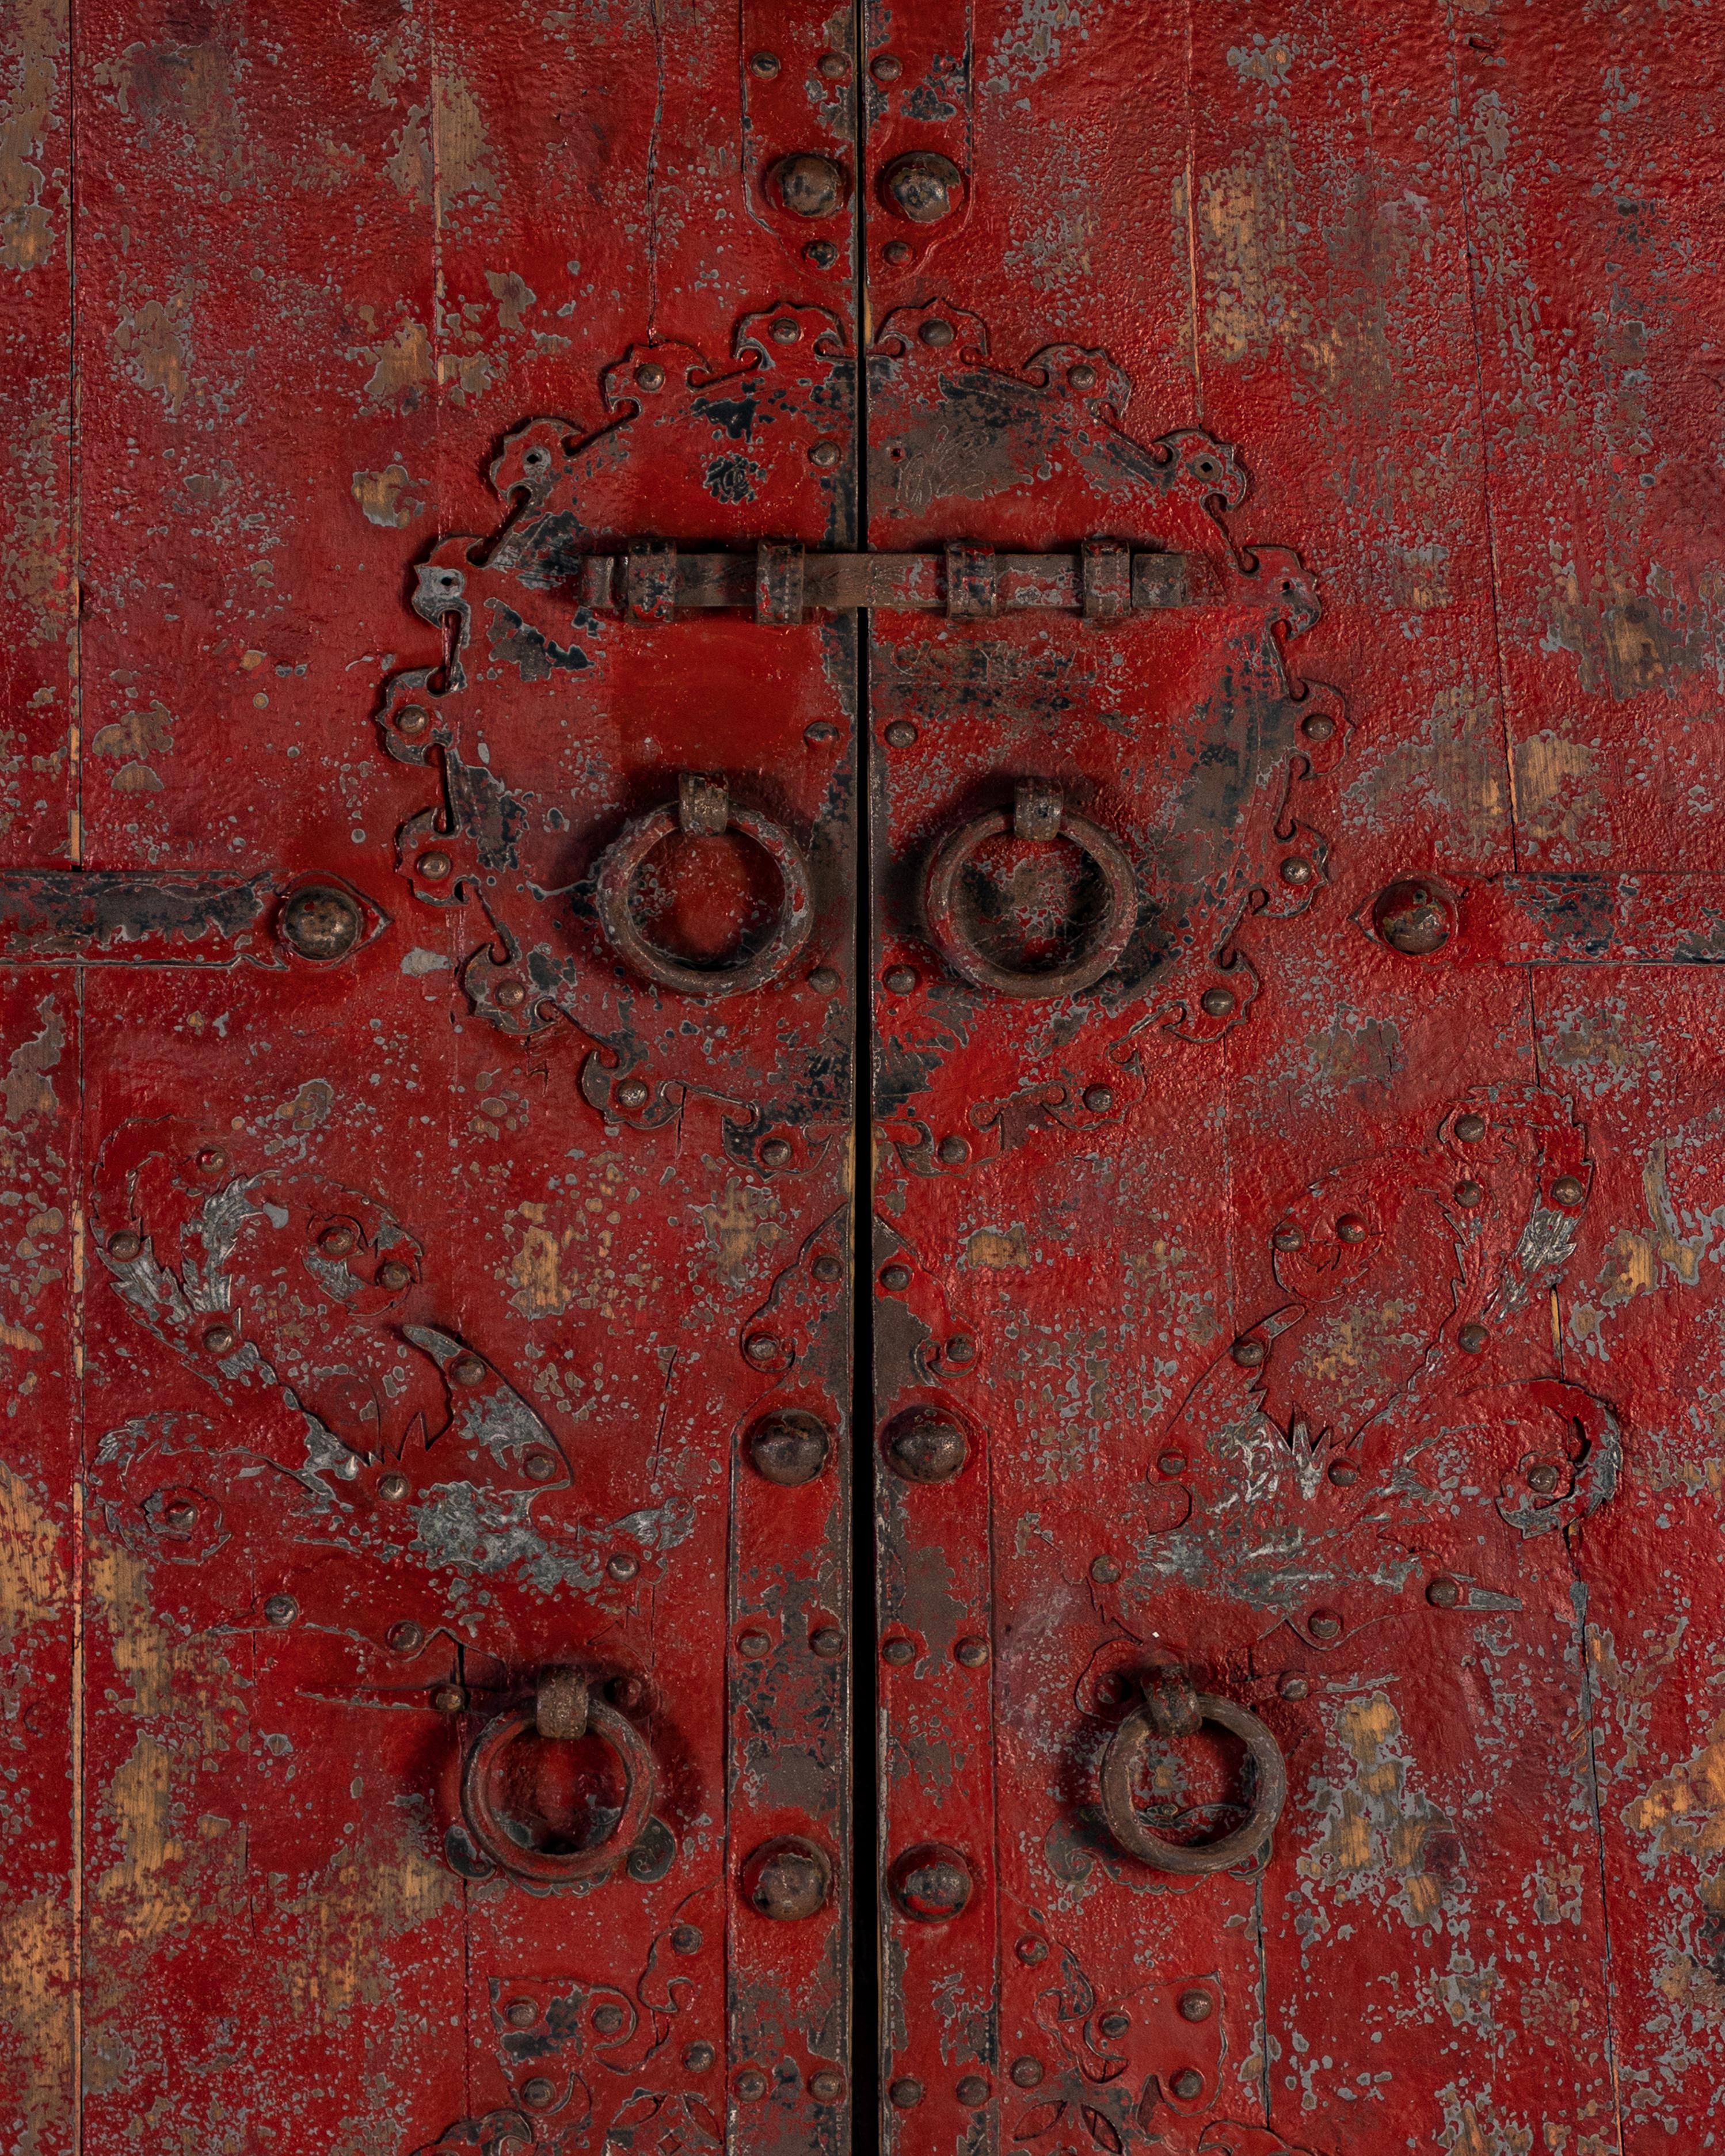 Paint Pair of Red Patina South Asian Doors Repurposed as Wall Decor 